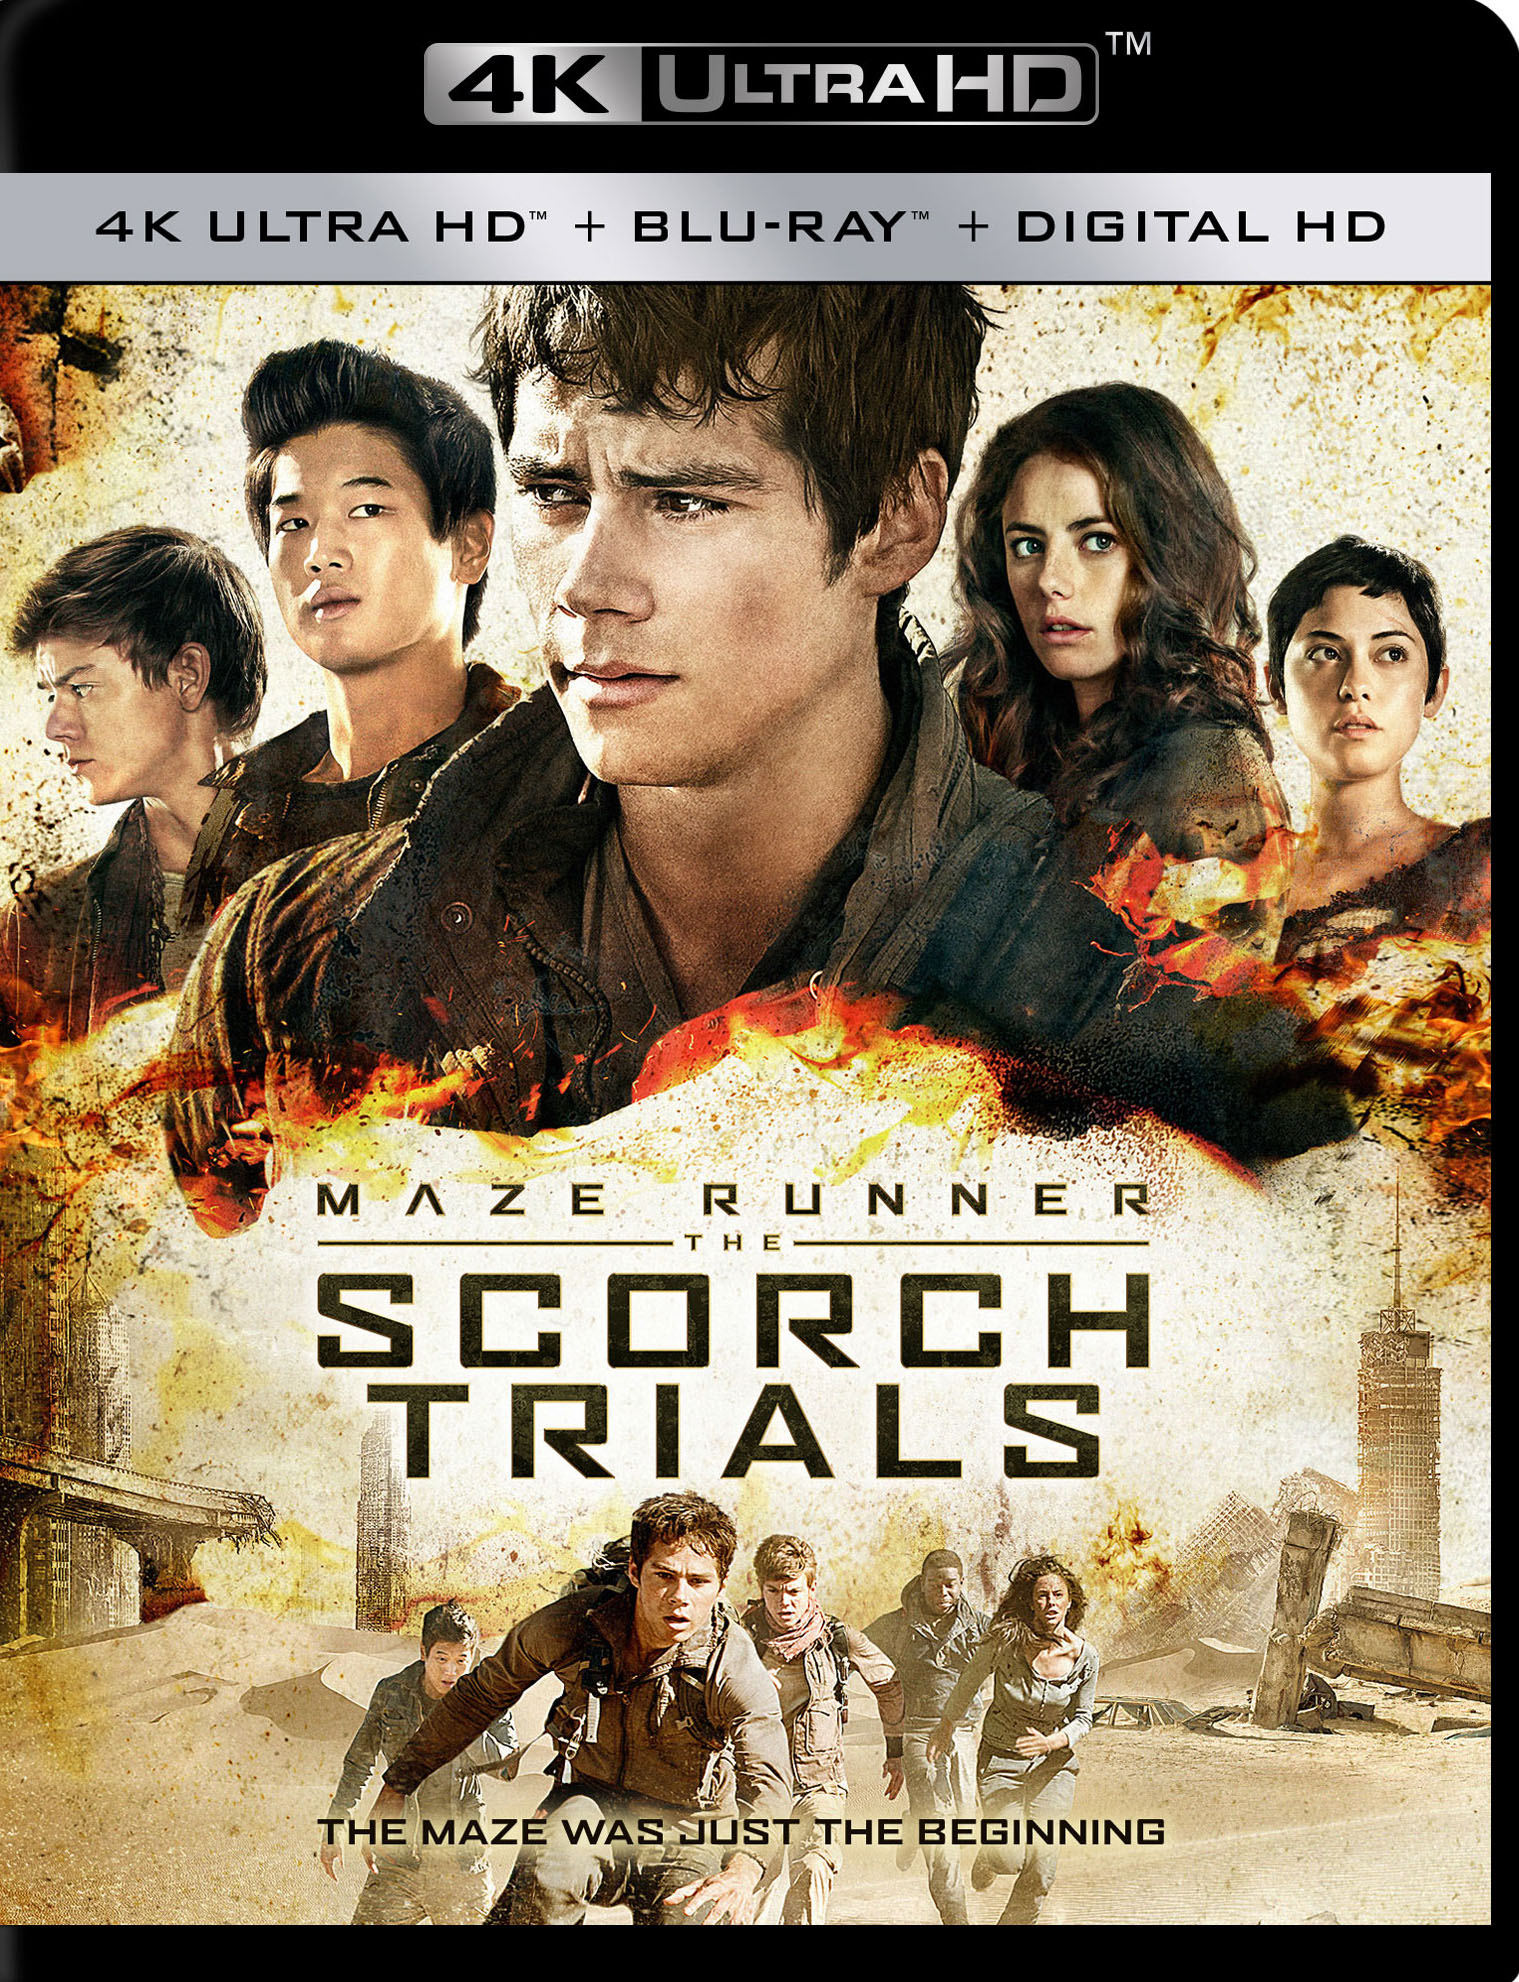 Maze Runner: The Scorch Trials (2015) Poster #4 - Trailer Addict